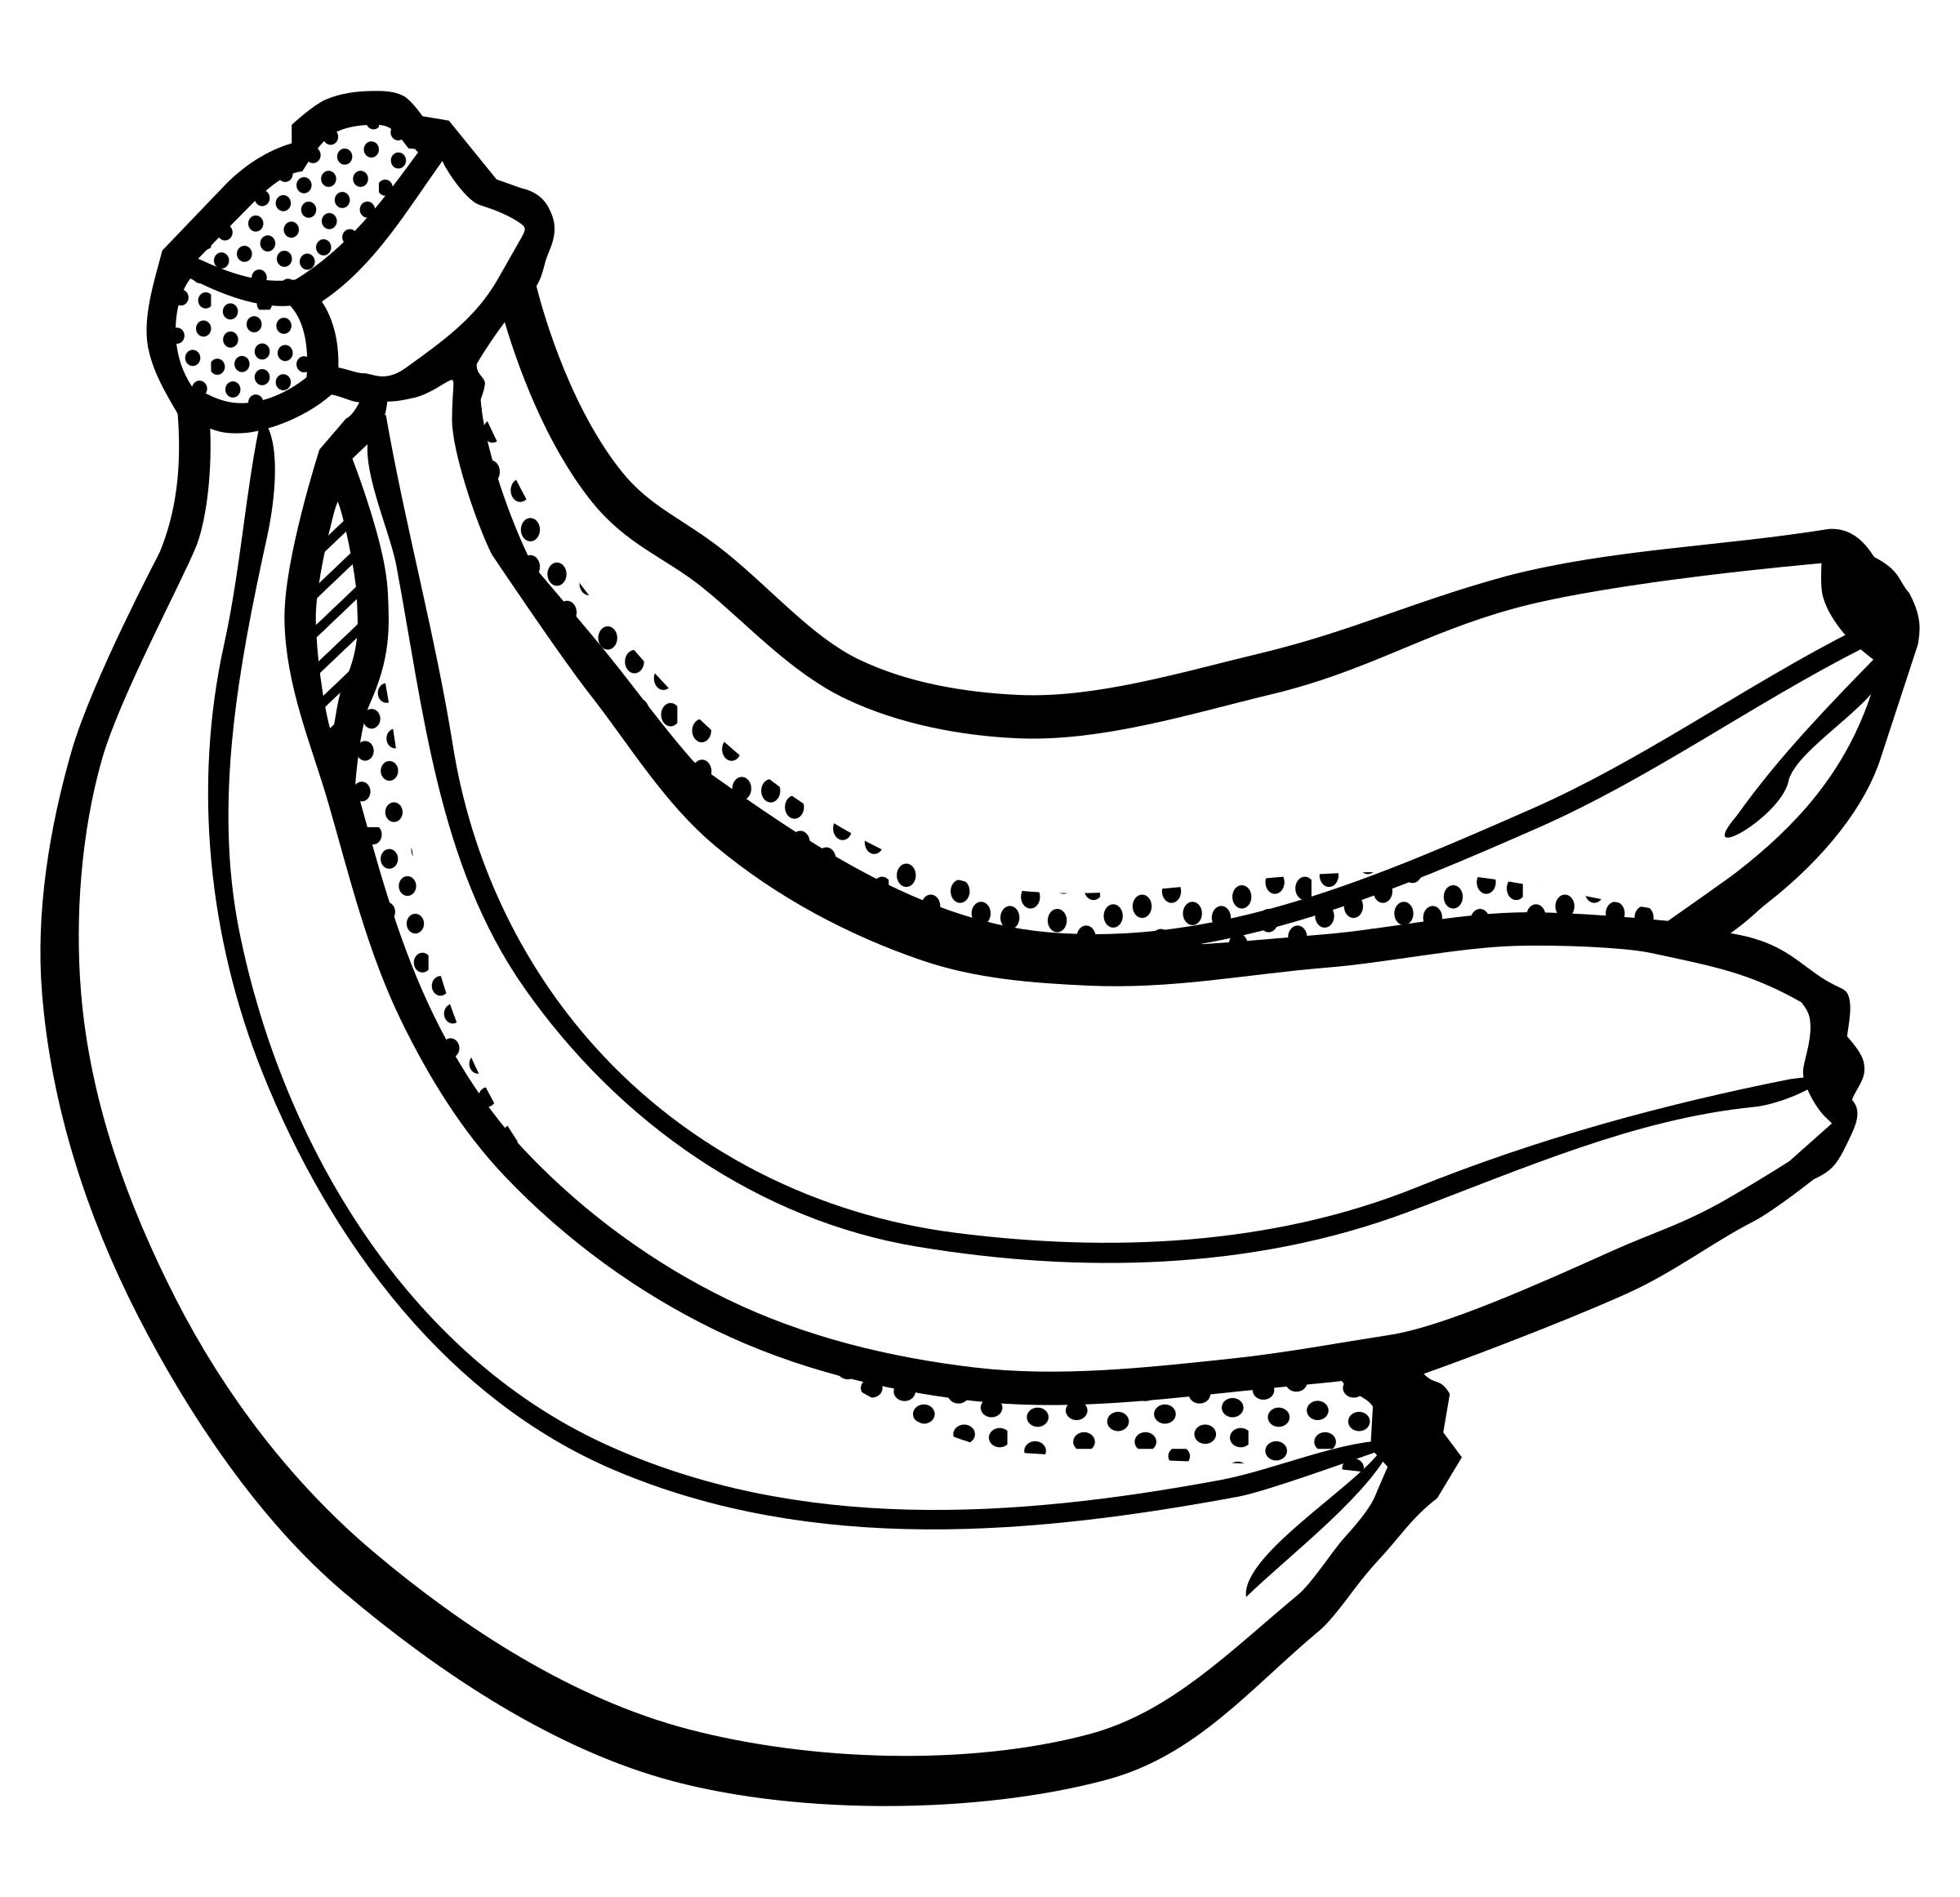 Banana clipart line art. Bunch of bananas lineart